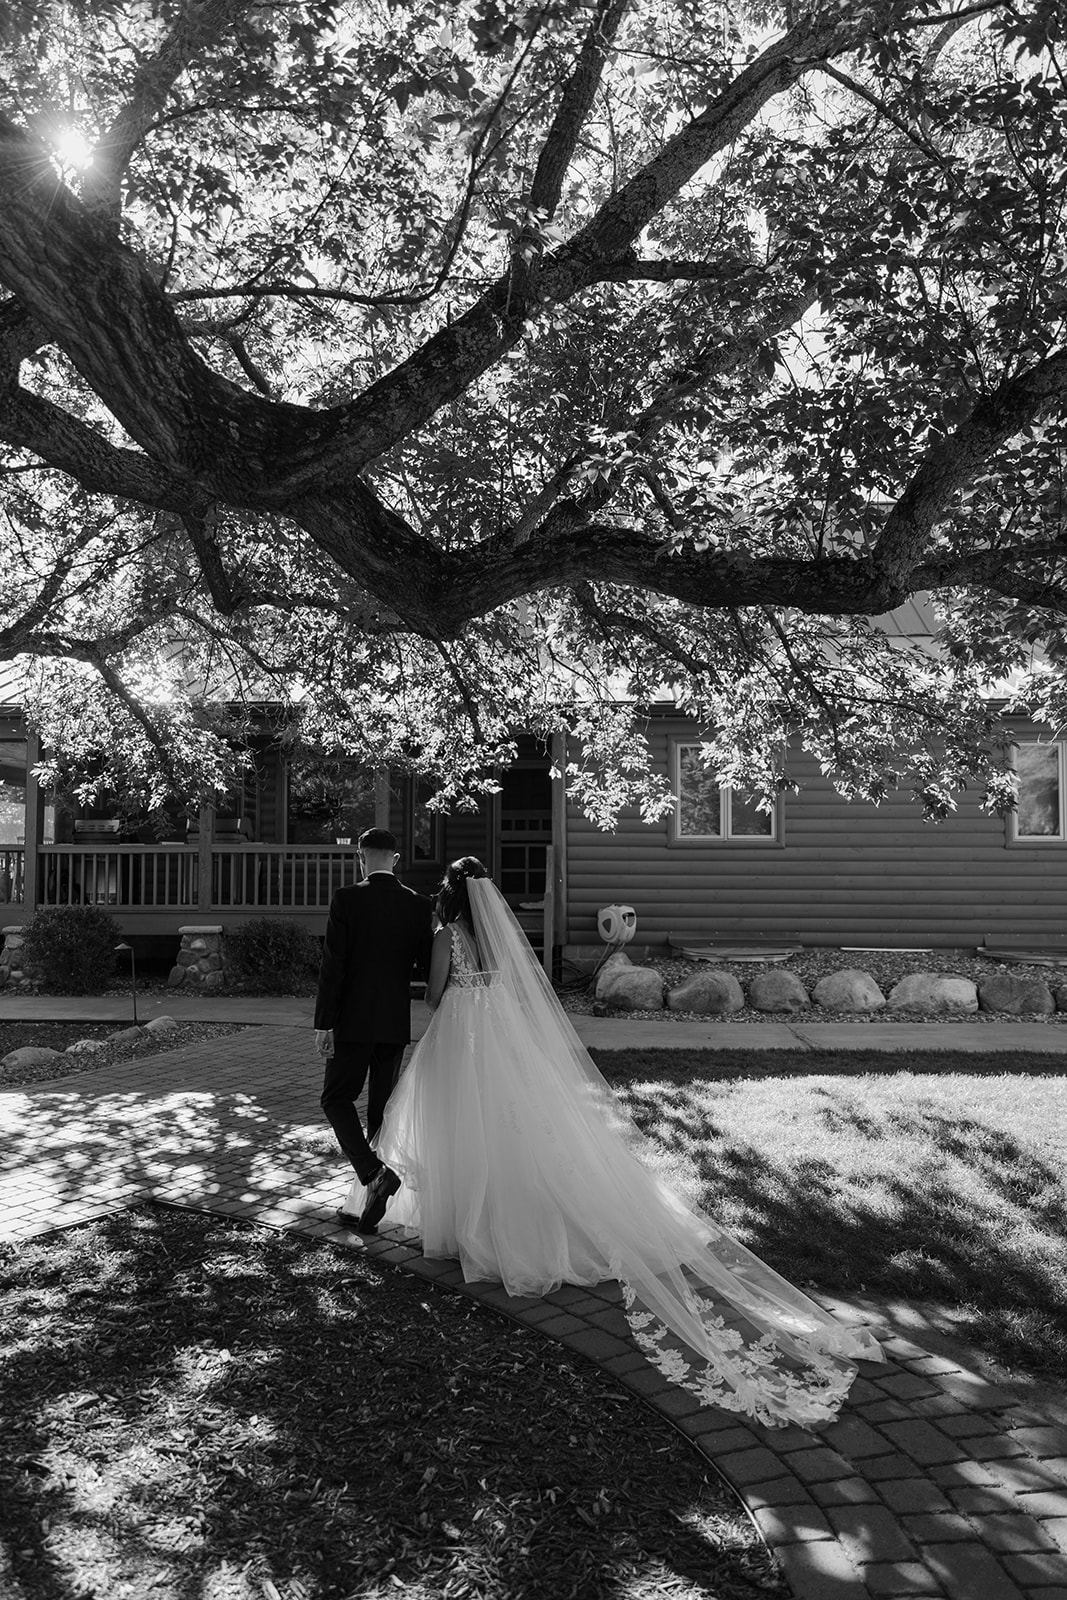 Bride and groom walk away under a tree